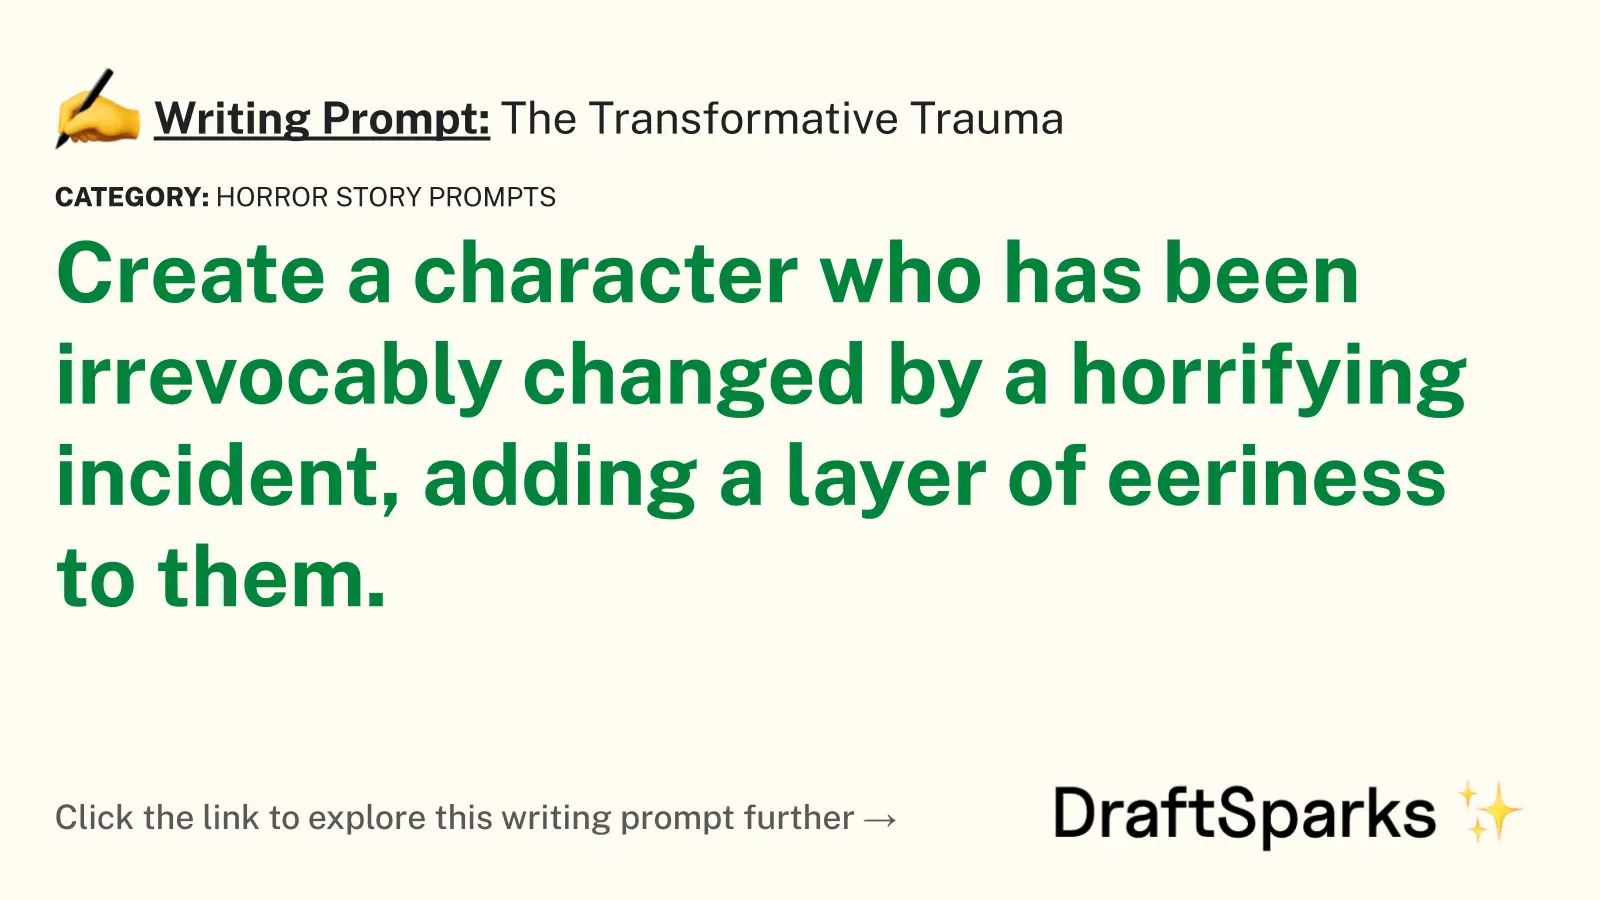 The Transformative Trauma